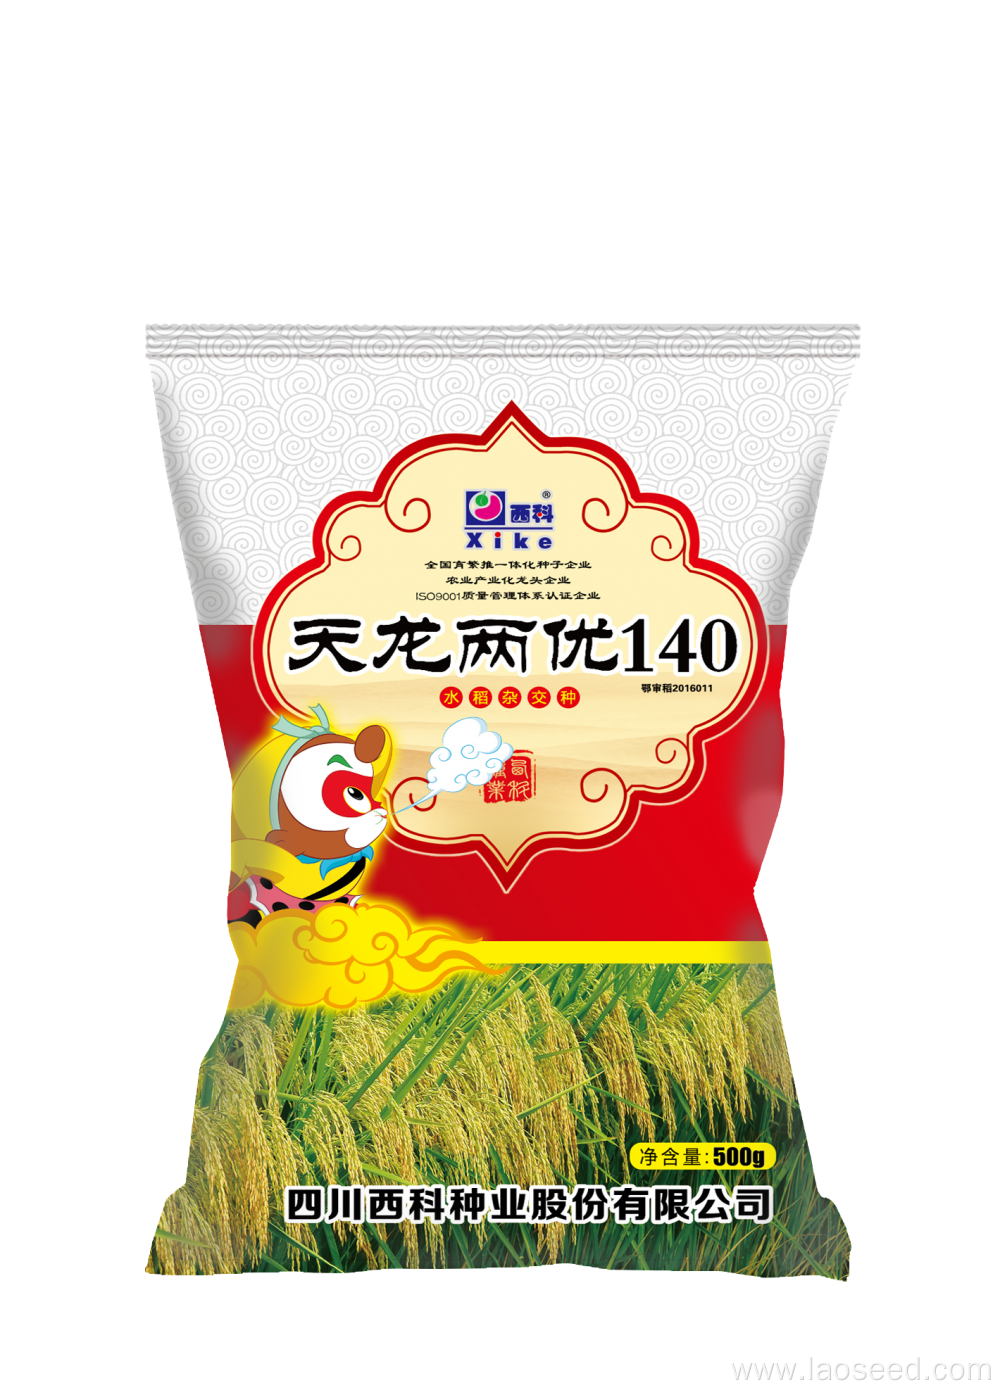 All natural Tianlong Liangyou 140 rice variety